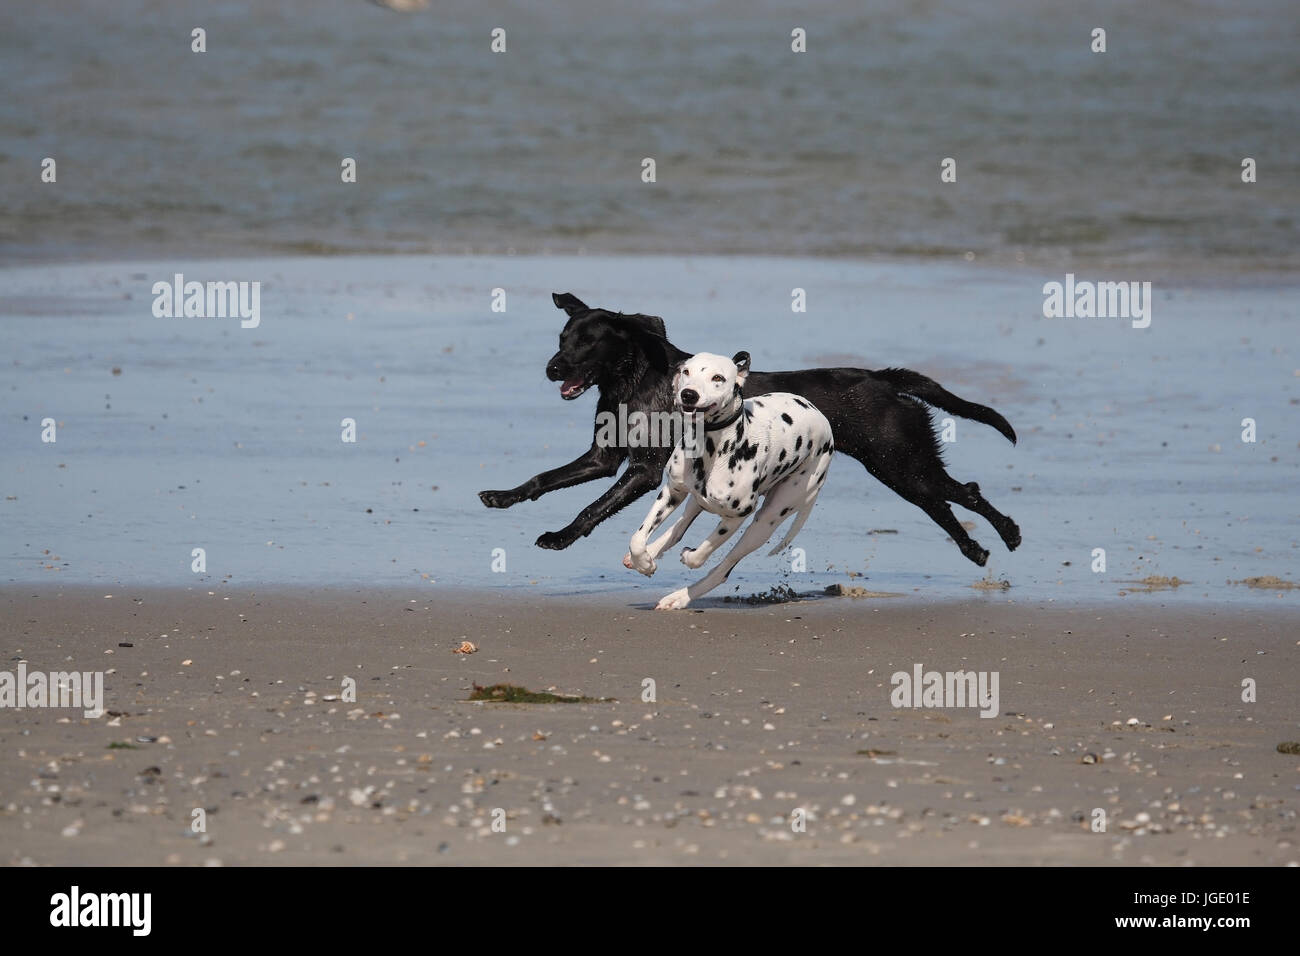 Two dogs run on the beach, Zwei Hunde rennen am Strand Stock Photo